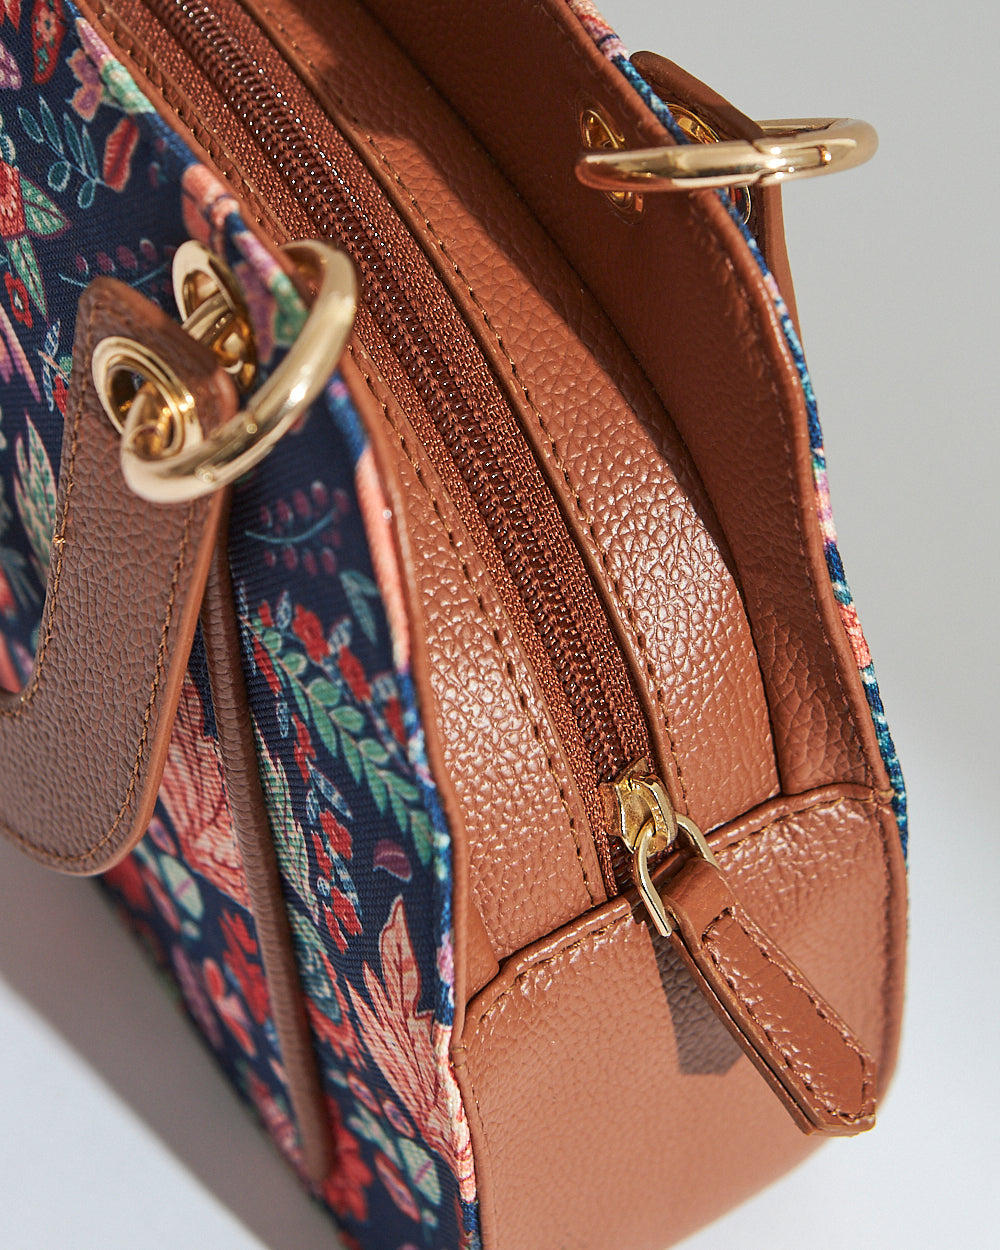 Hand Bag | Batik Bloom - Navy